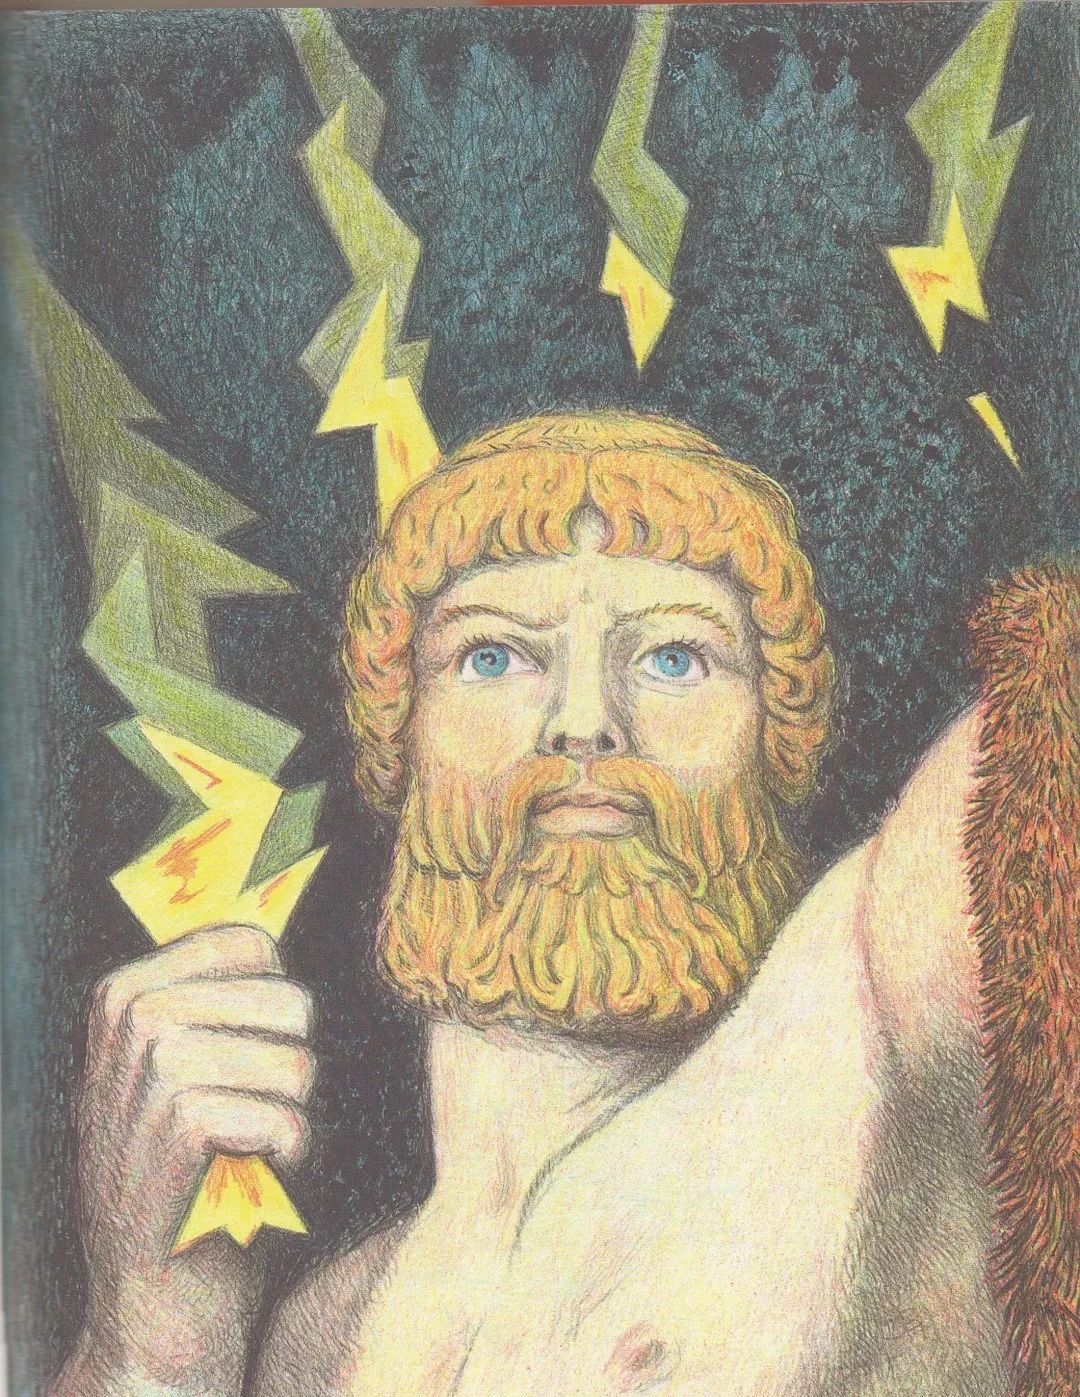 Greek Prometheus Wallpapers - Top Free Greek Prometheus Backgrounds ...